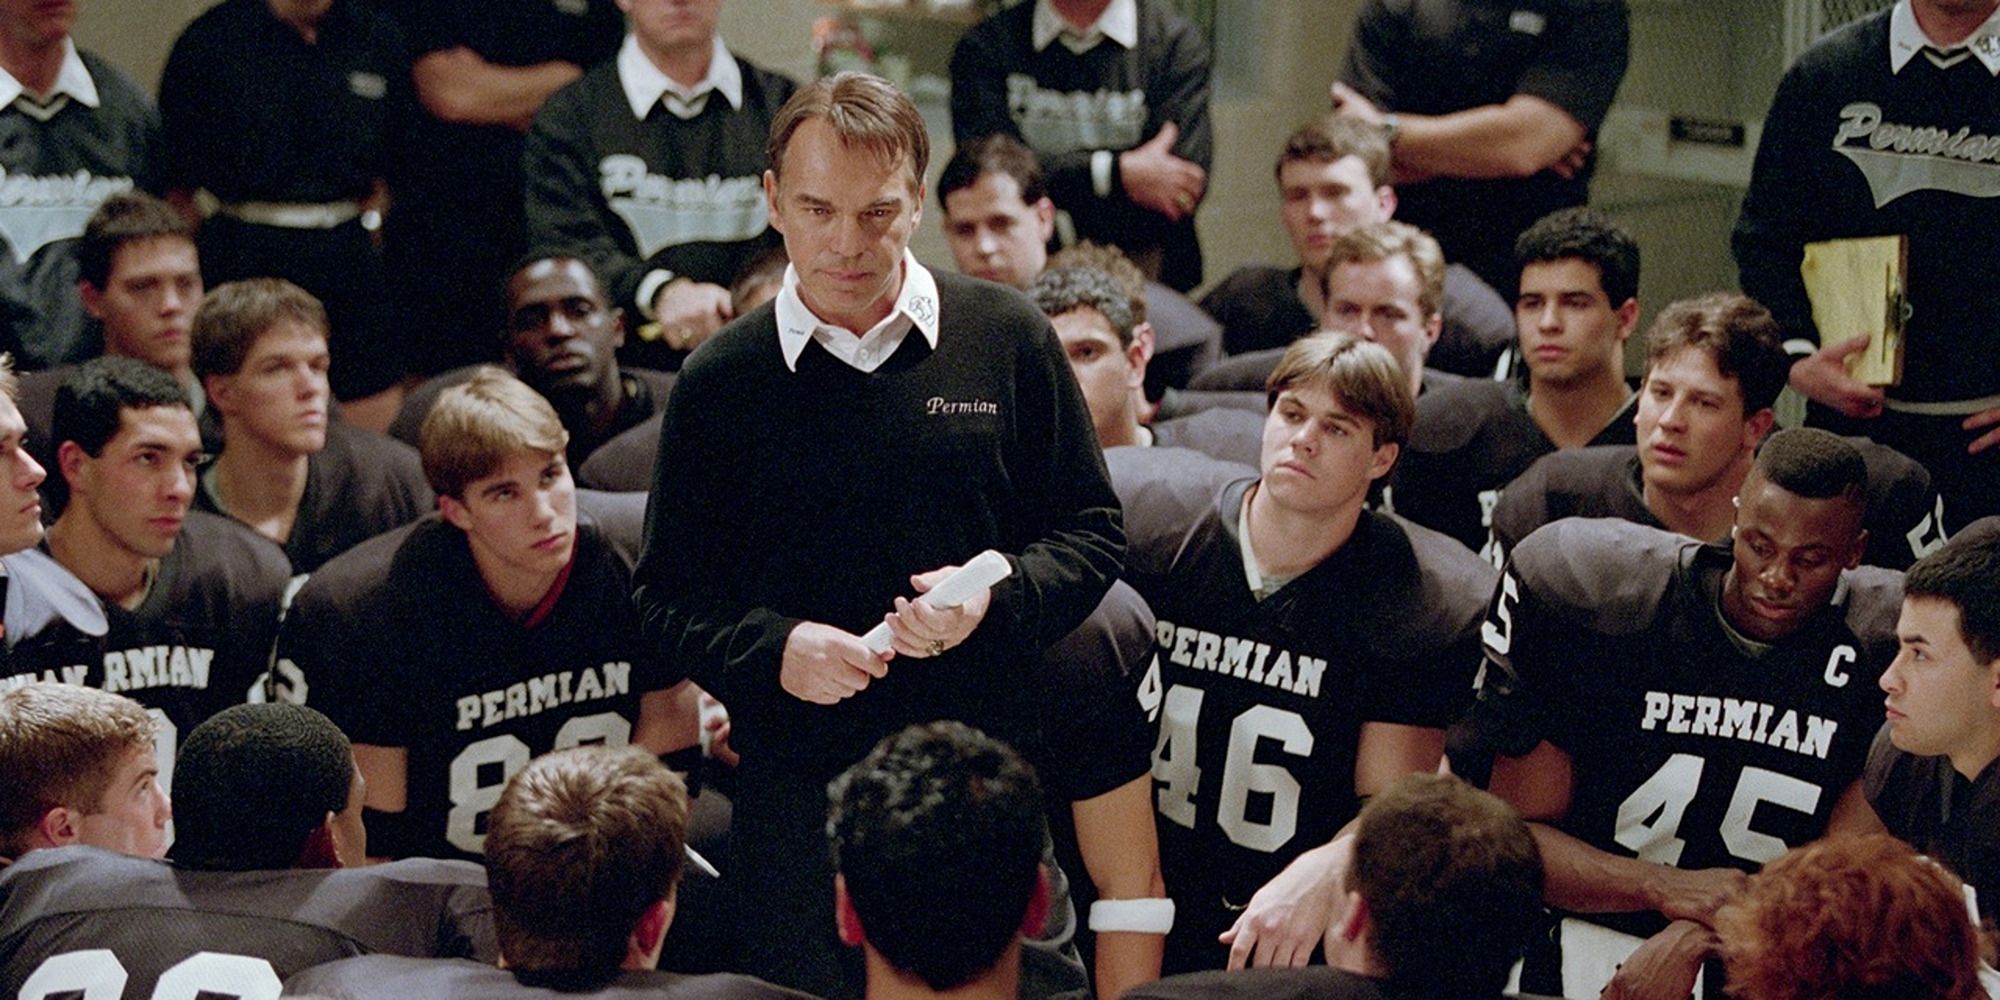 Billy Bob Thornton instructing his football players in the locker room